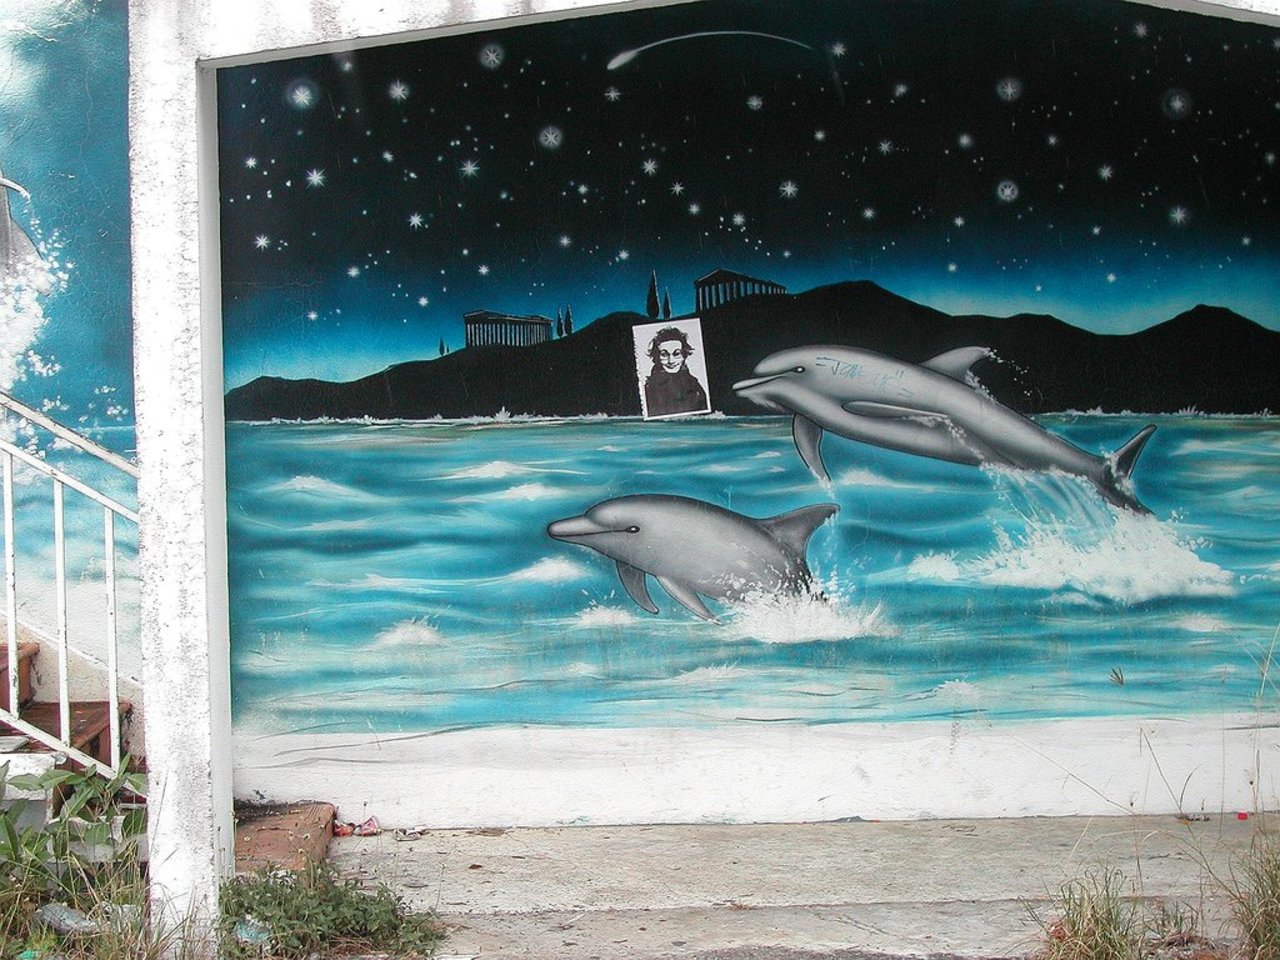 Street Art by Nojnoma in # http://www.urbacolors.com #art #mural #graffiti #streetart https://t.co/4Ur69aTD4P